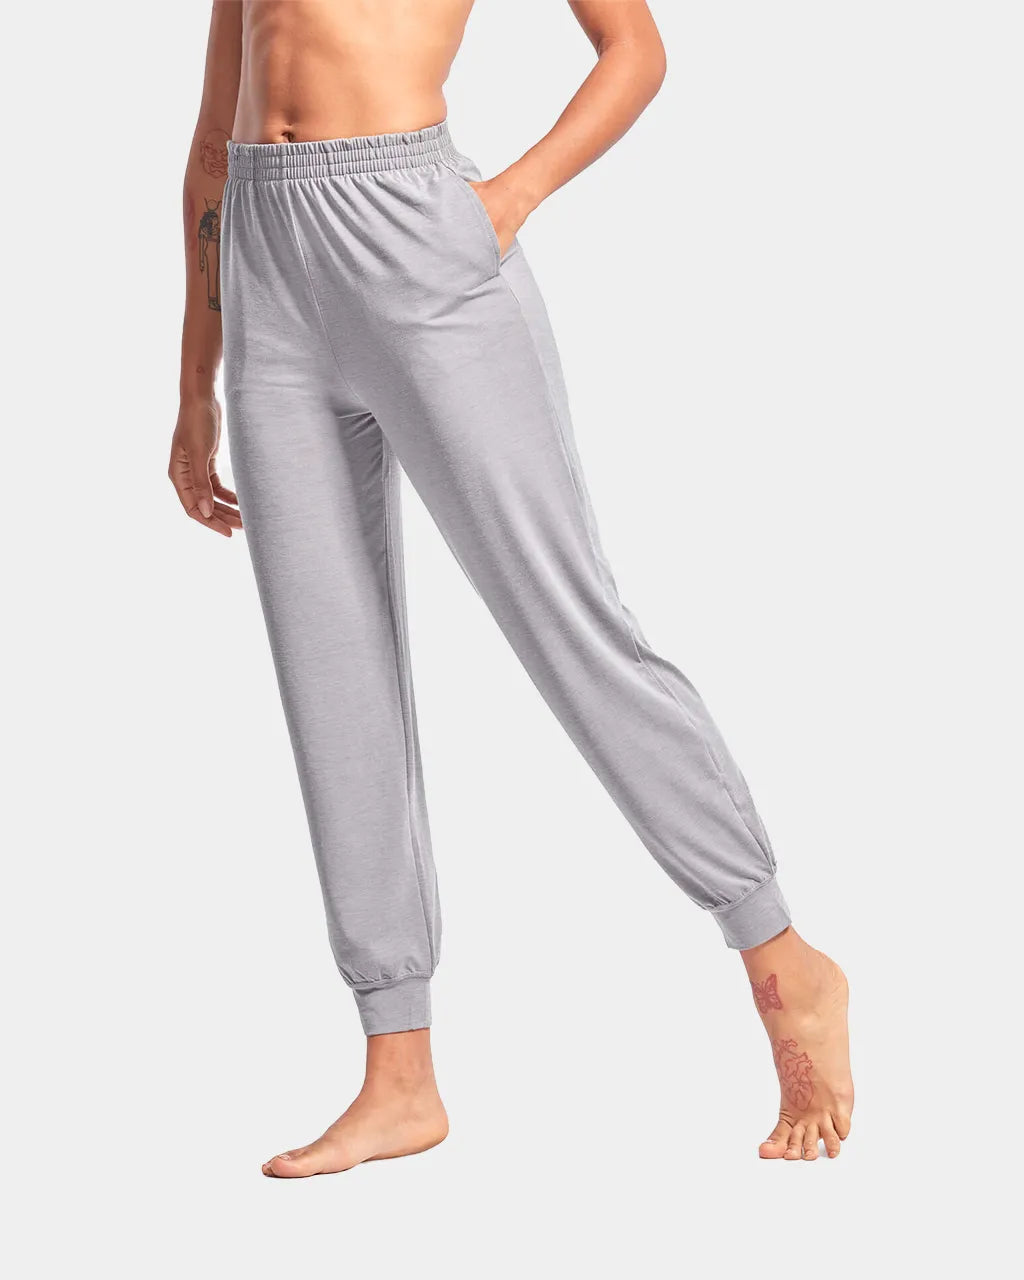 KYMIRA RECHARGE Infrared Women's Sleepwear Bottoms